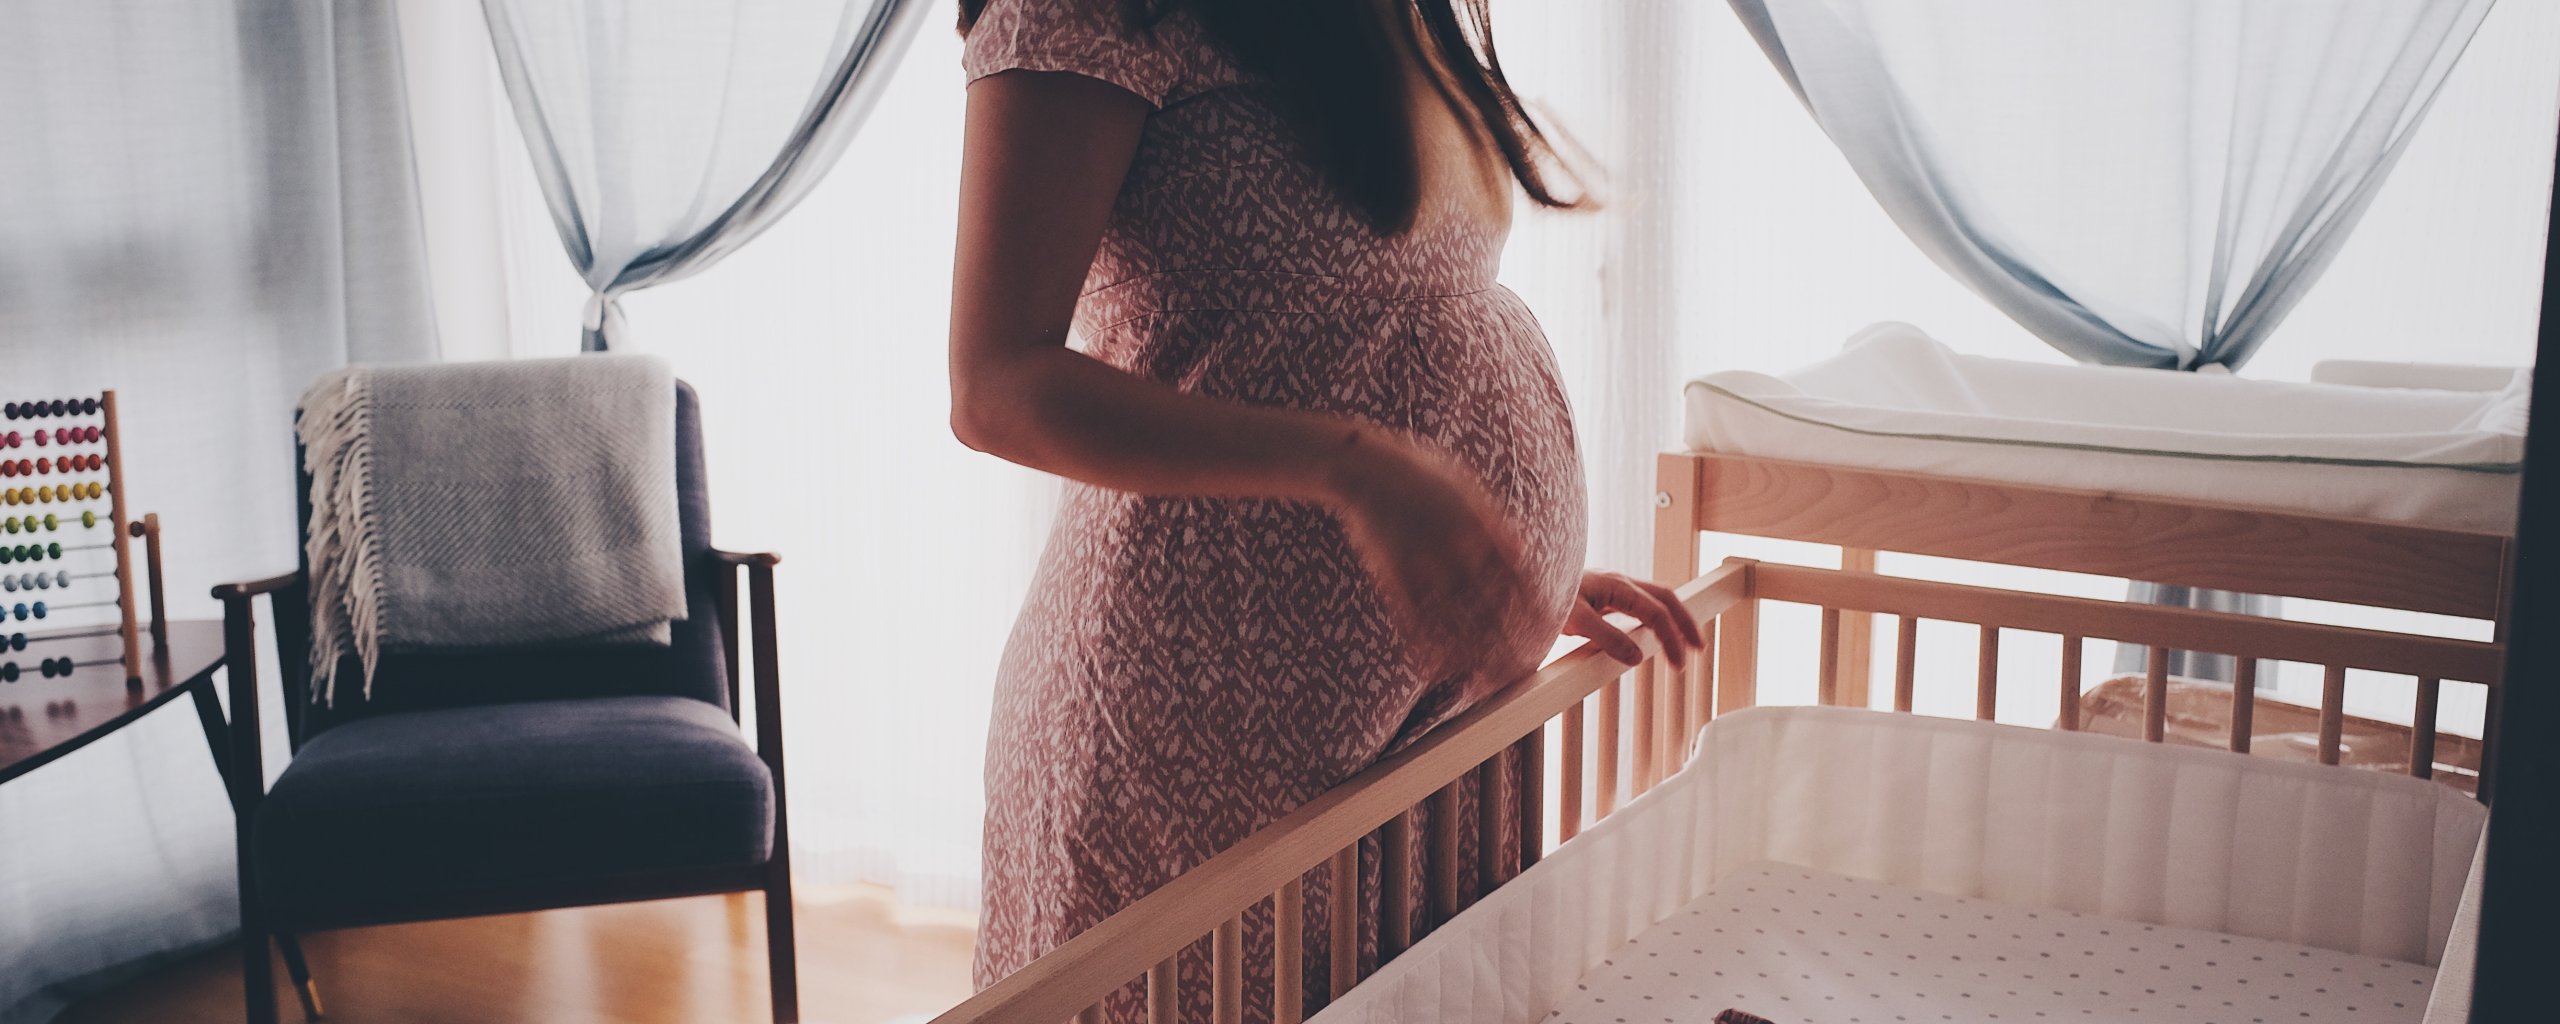 Zwangere vrouw staat bij lege ledikant